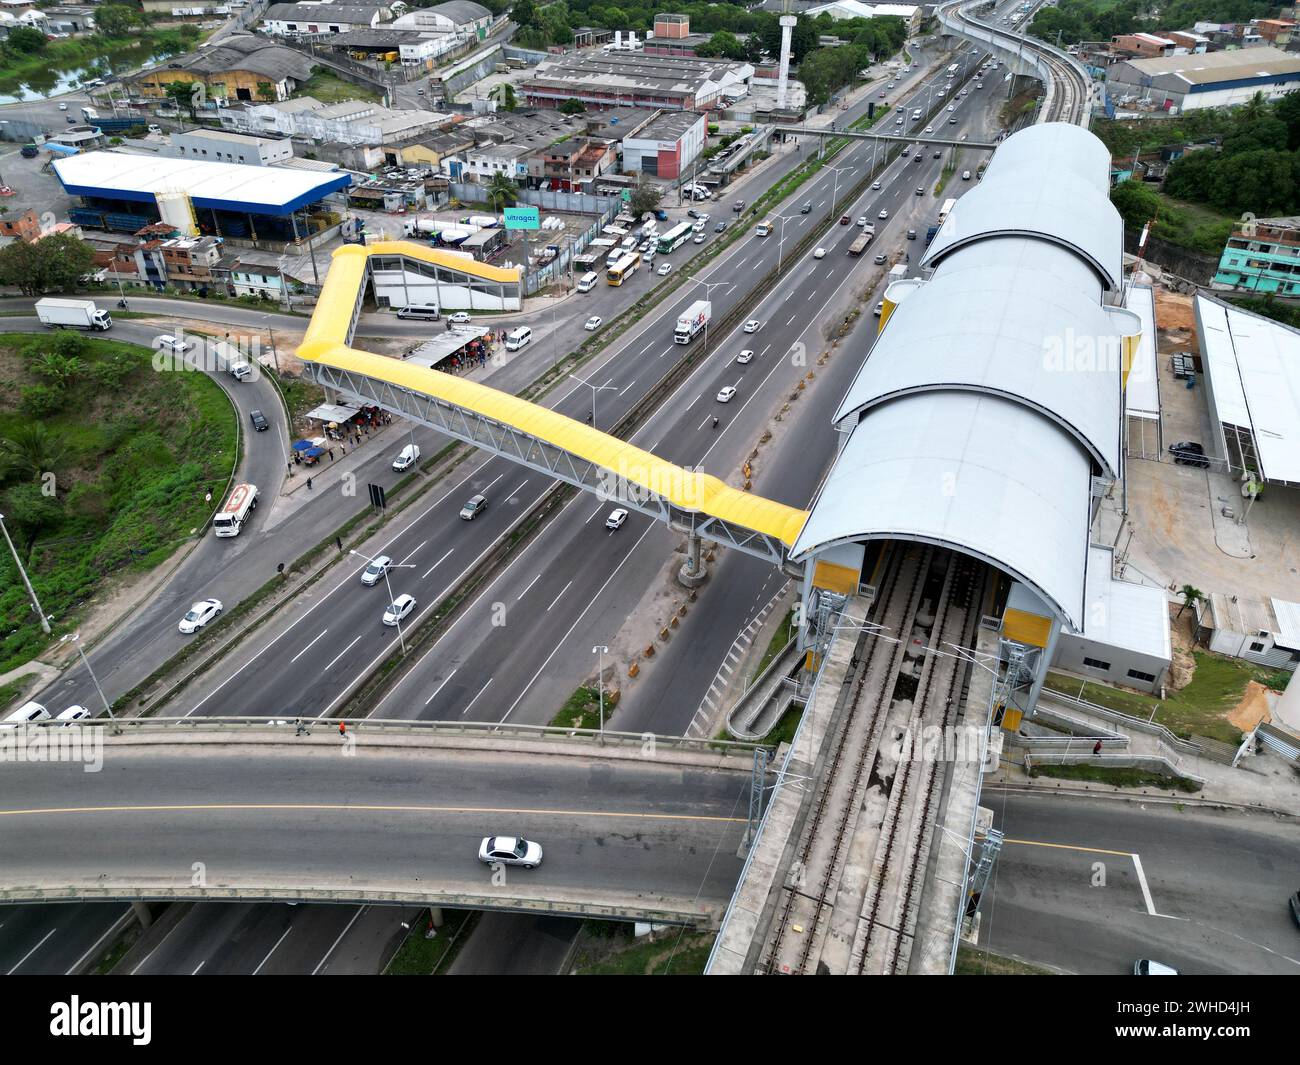 salvador, bahia, brazil - december 29, 2023: view of the Campinas station of the Salvador metro. Stock Photo